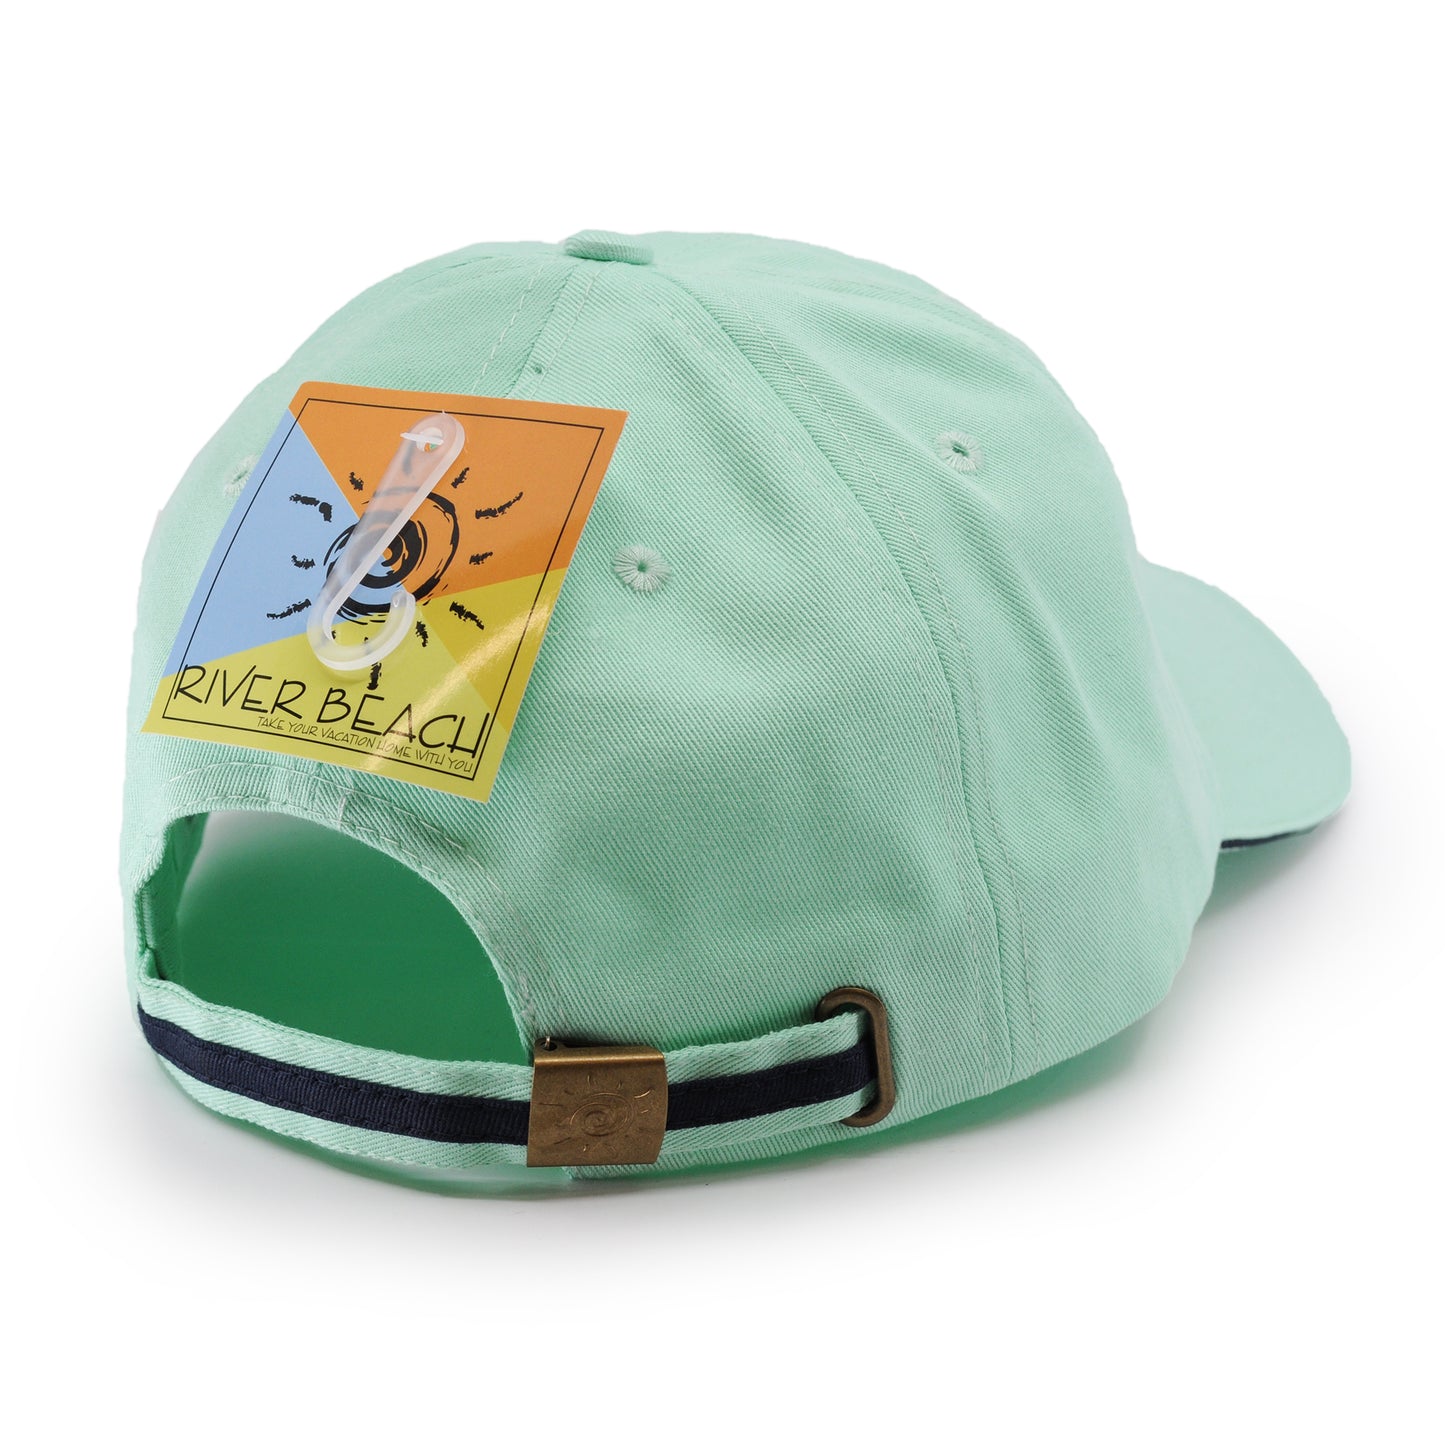 River Beach 100% cotton Unisex Sports Cap in color Mint Green. Back View showcasing buckle enclosure.